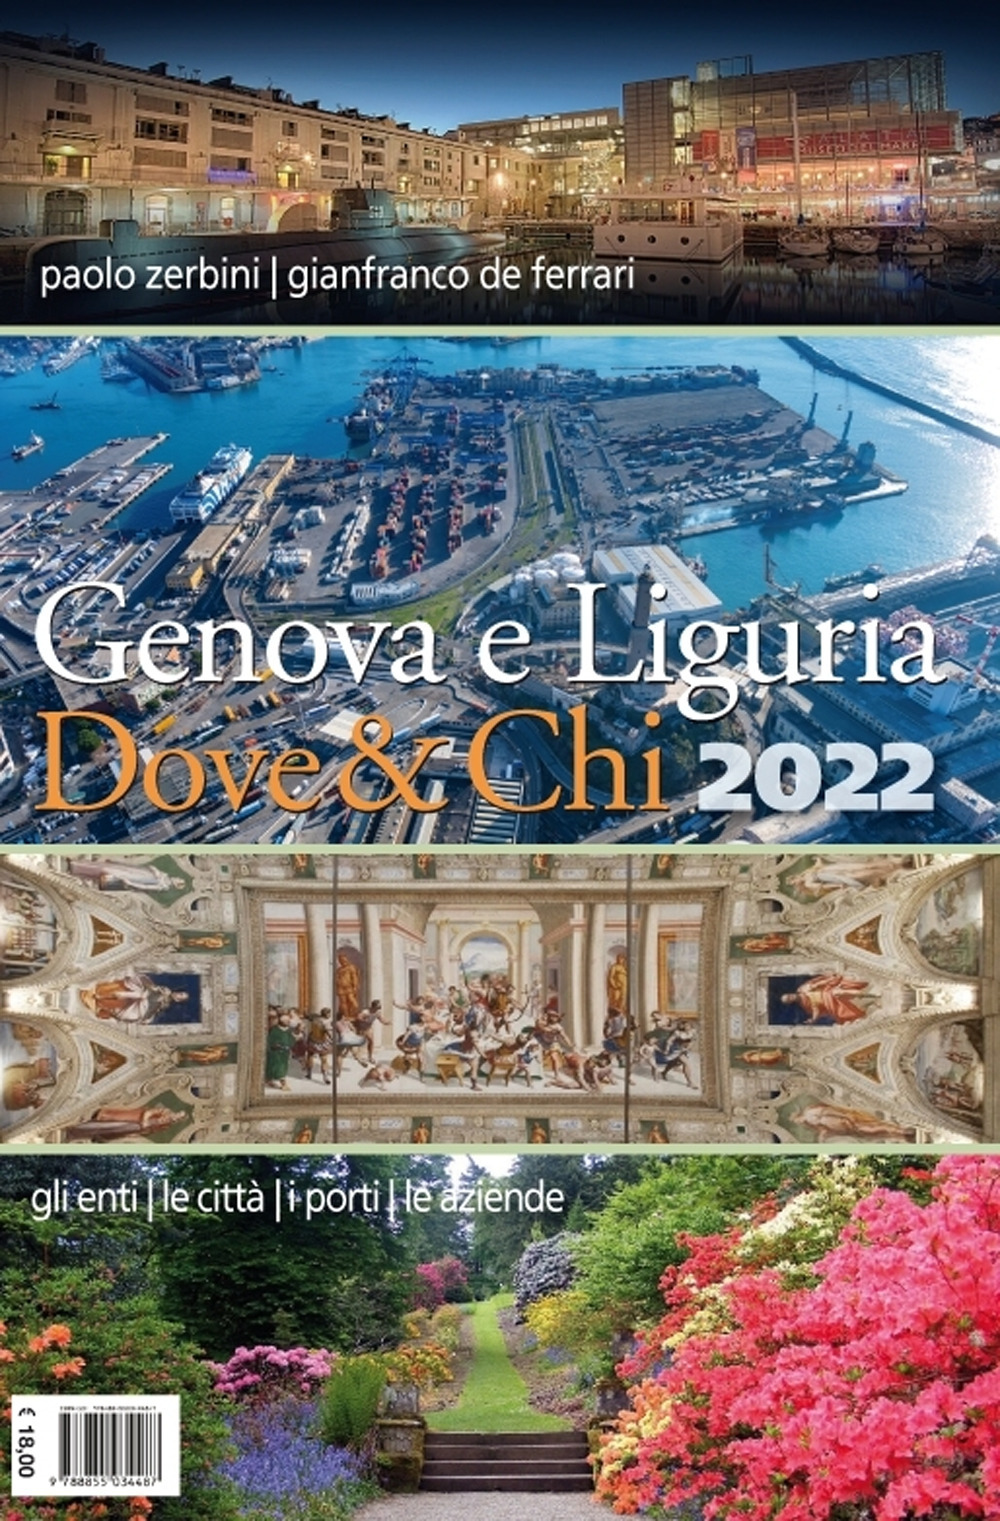 Genova e Liguria dove & chi 2022